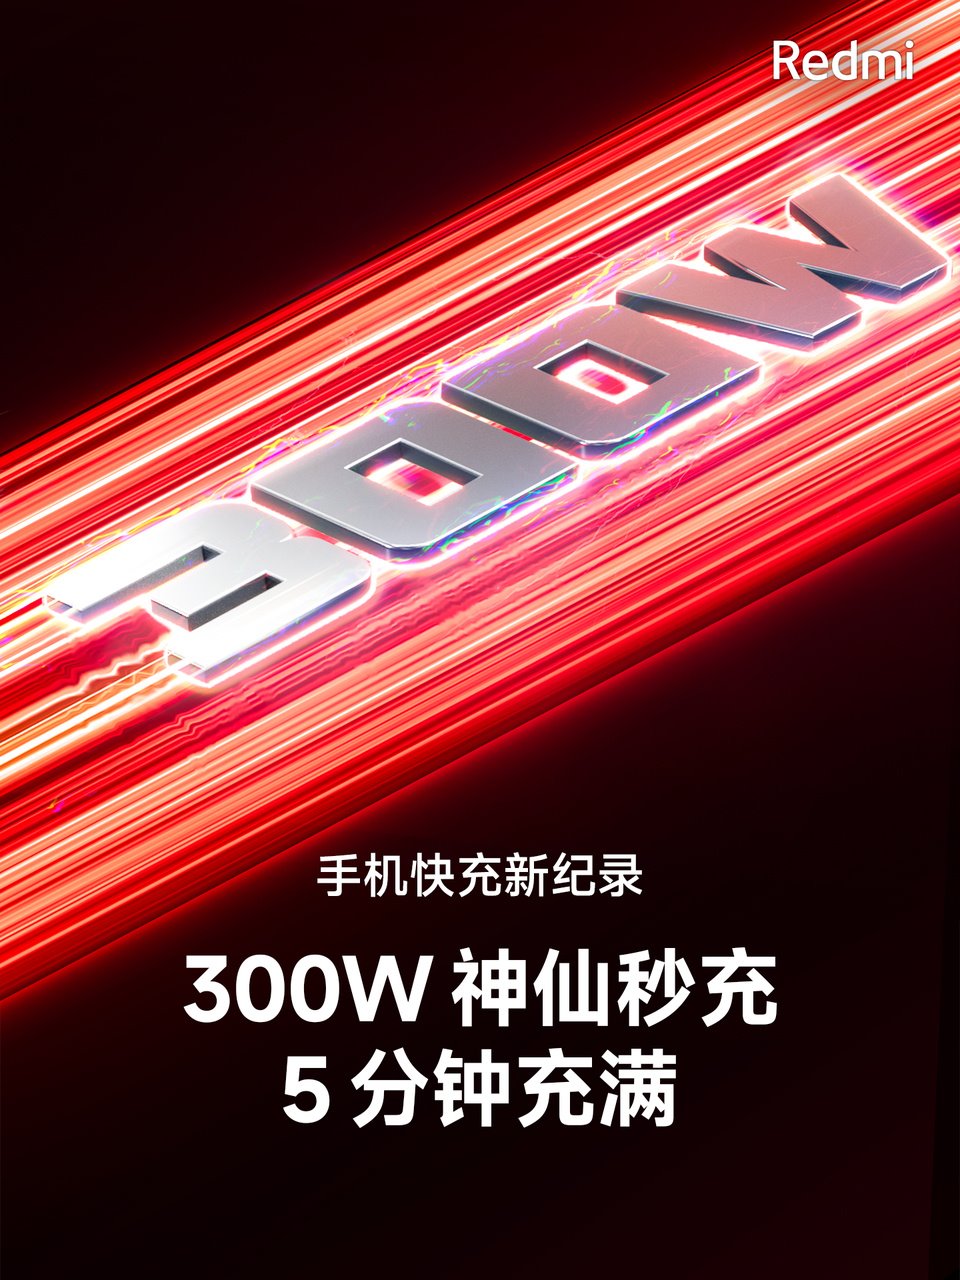 Redmi Pamer Teknologi Fast Charging 300W